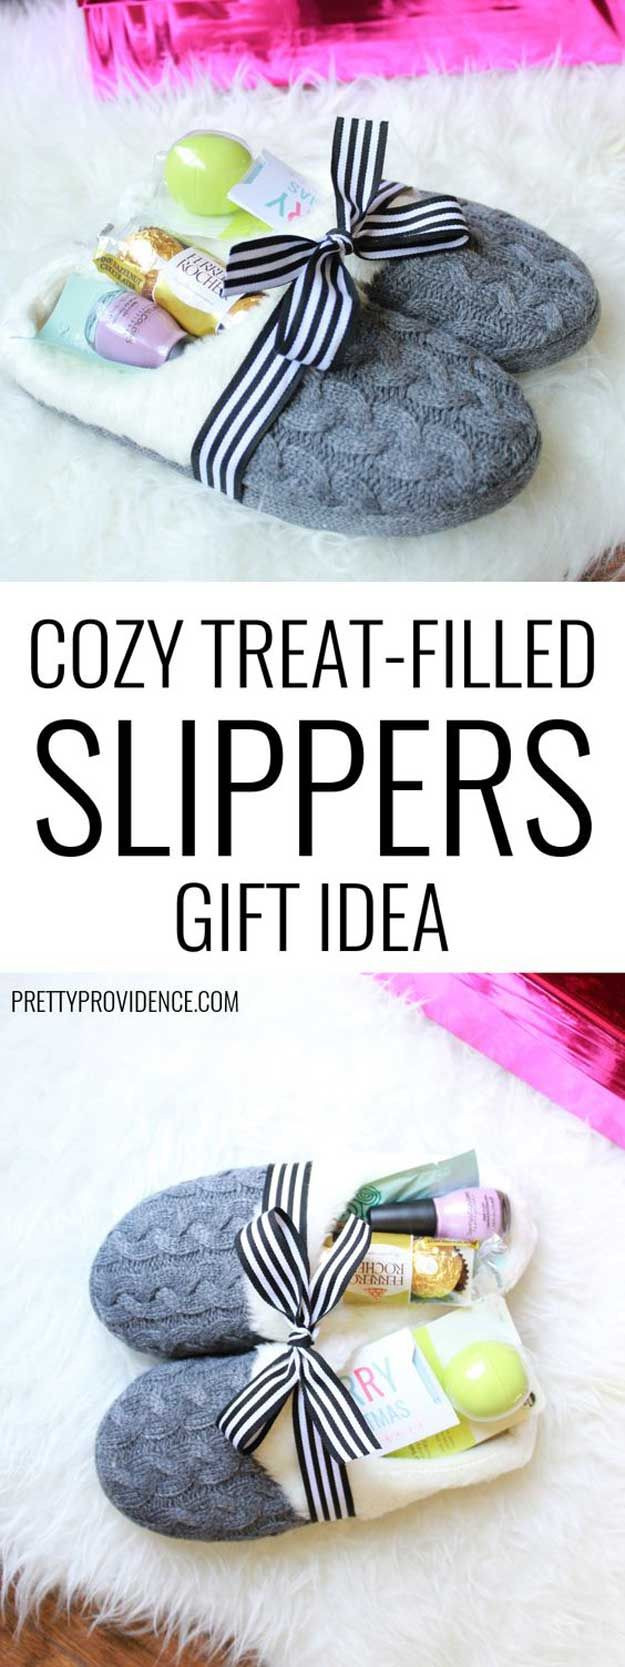 Christmas Gift Ideas For Mother
 Best 25 Christmas ideas on Pinterest